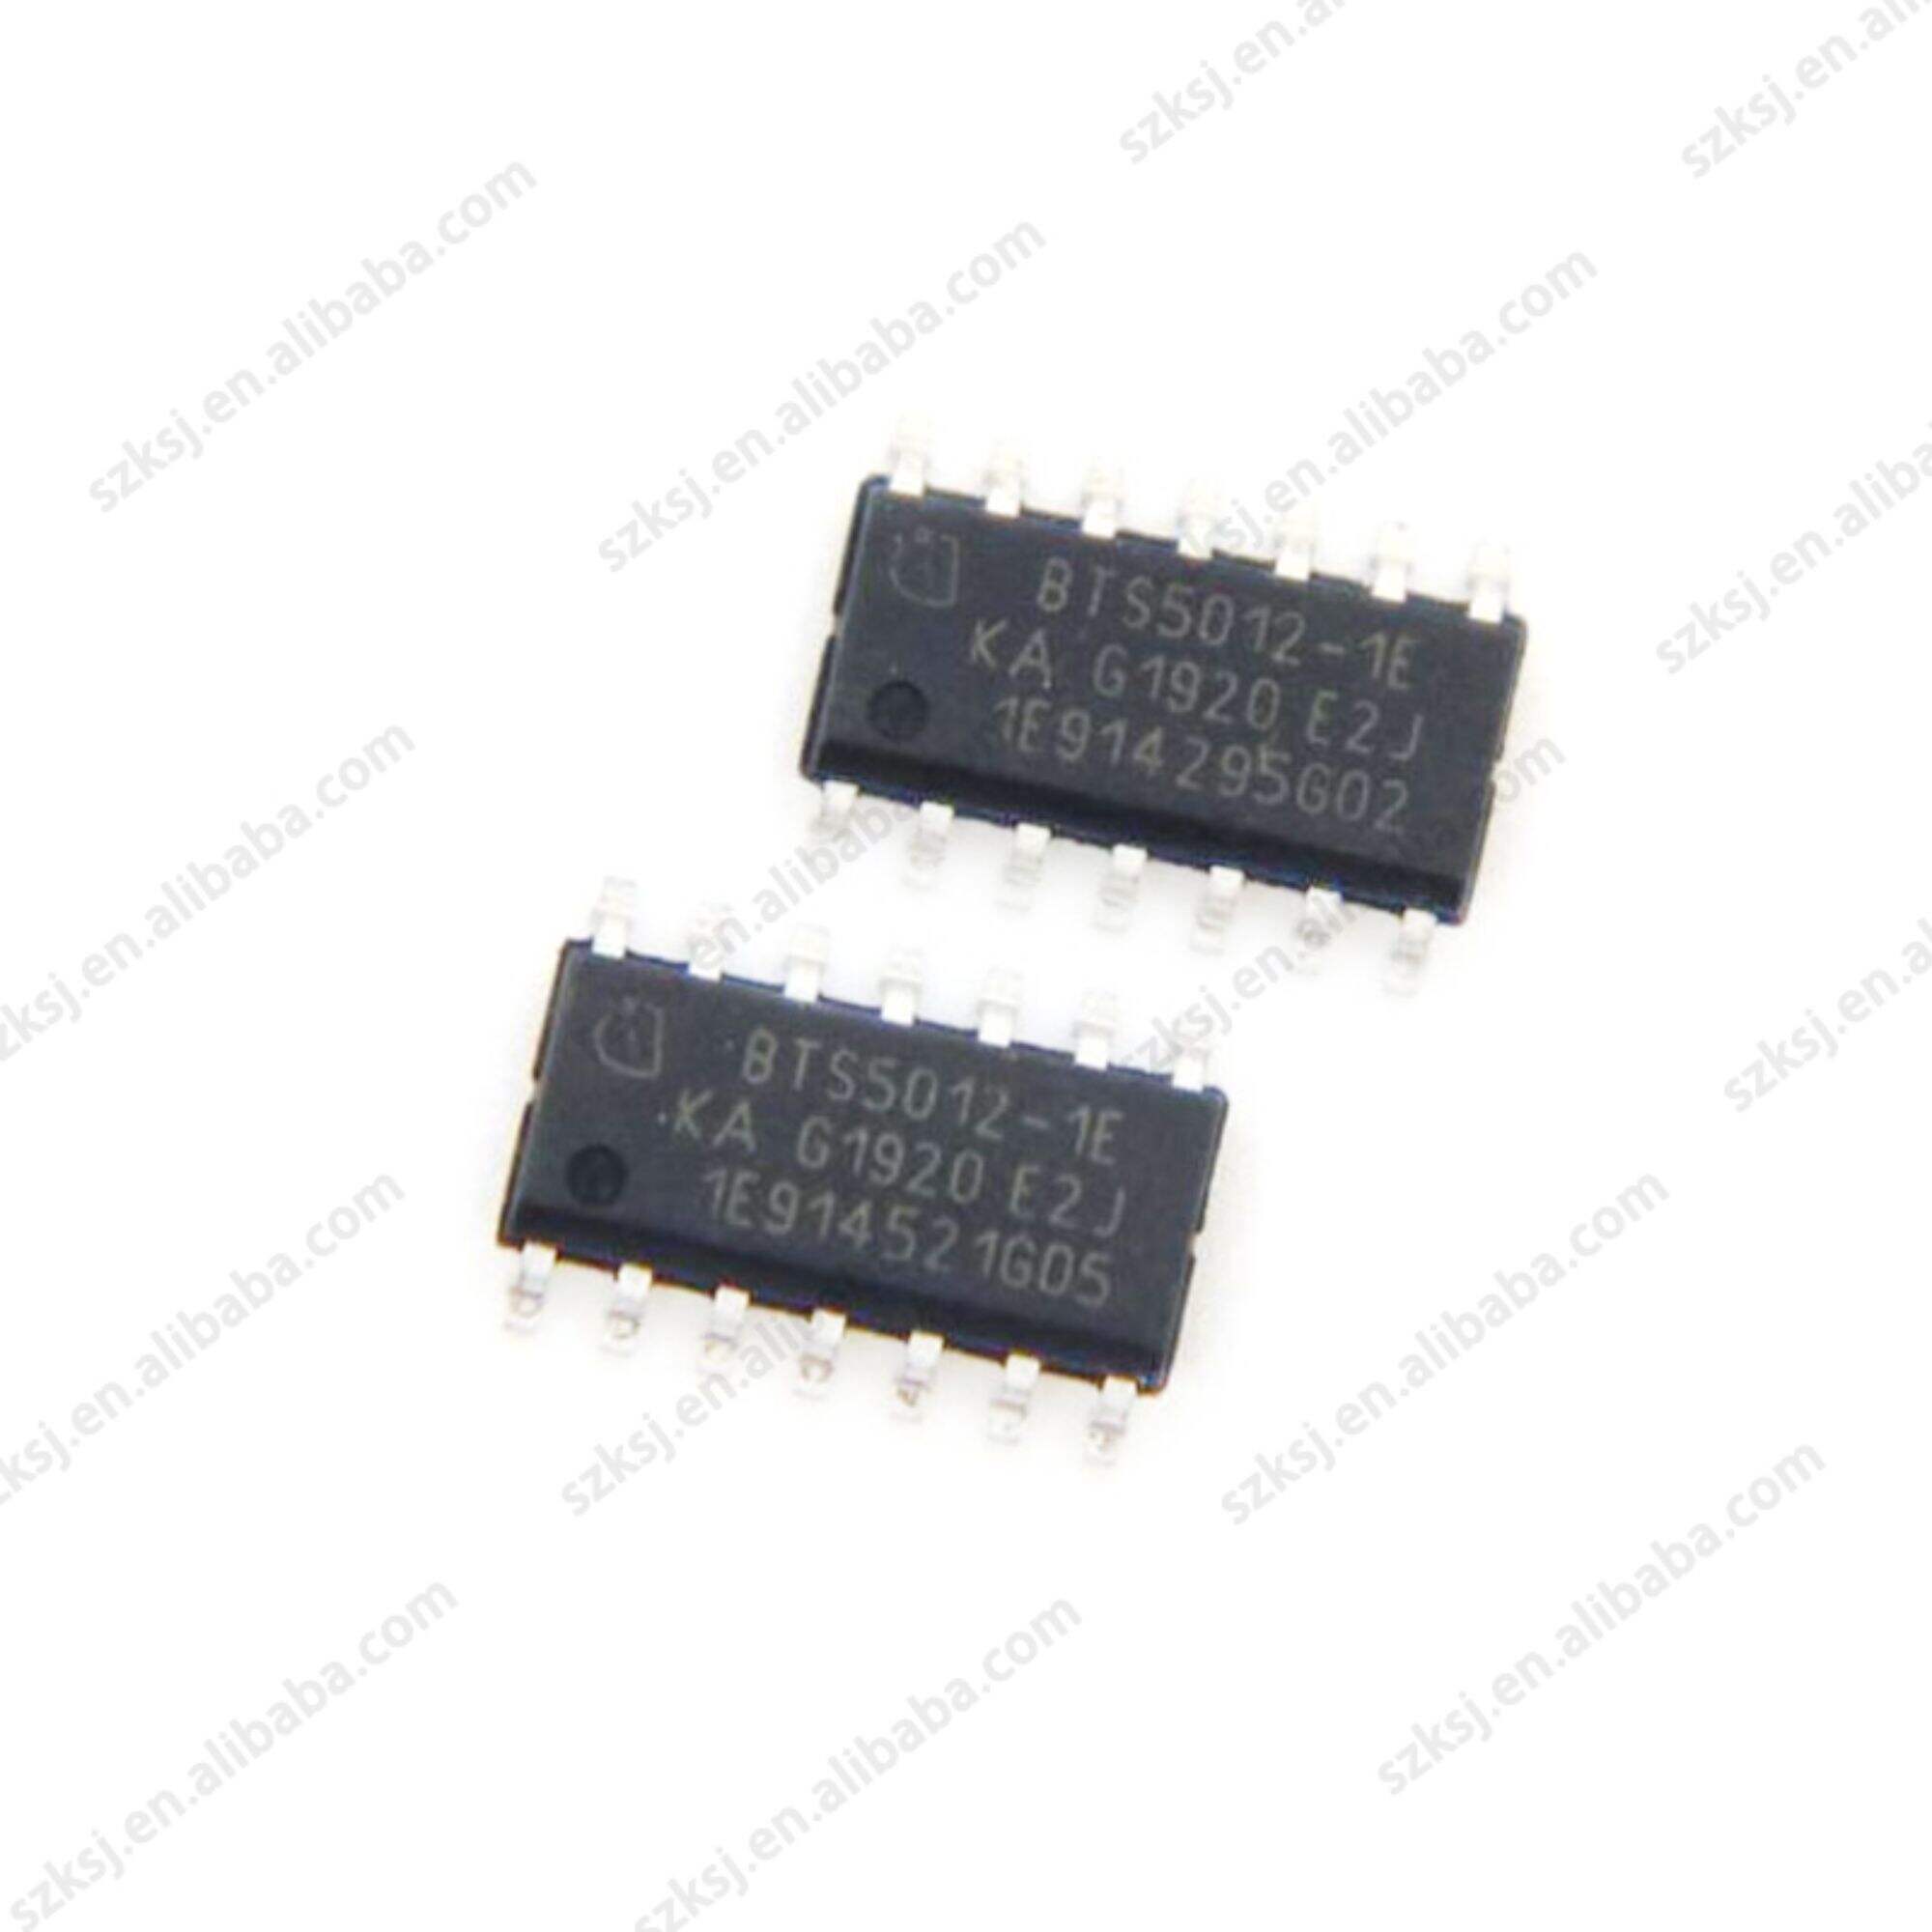 BTS5012 1EKAXUMA1 BTS5012-1EKA new original spot load driver chip 14-SOIC integrated circuit IC